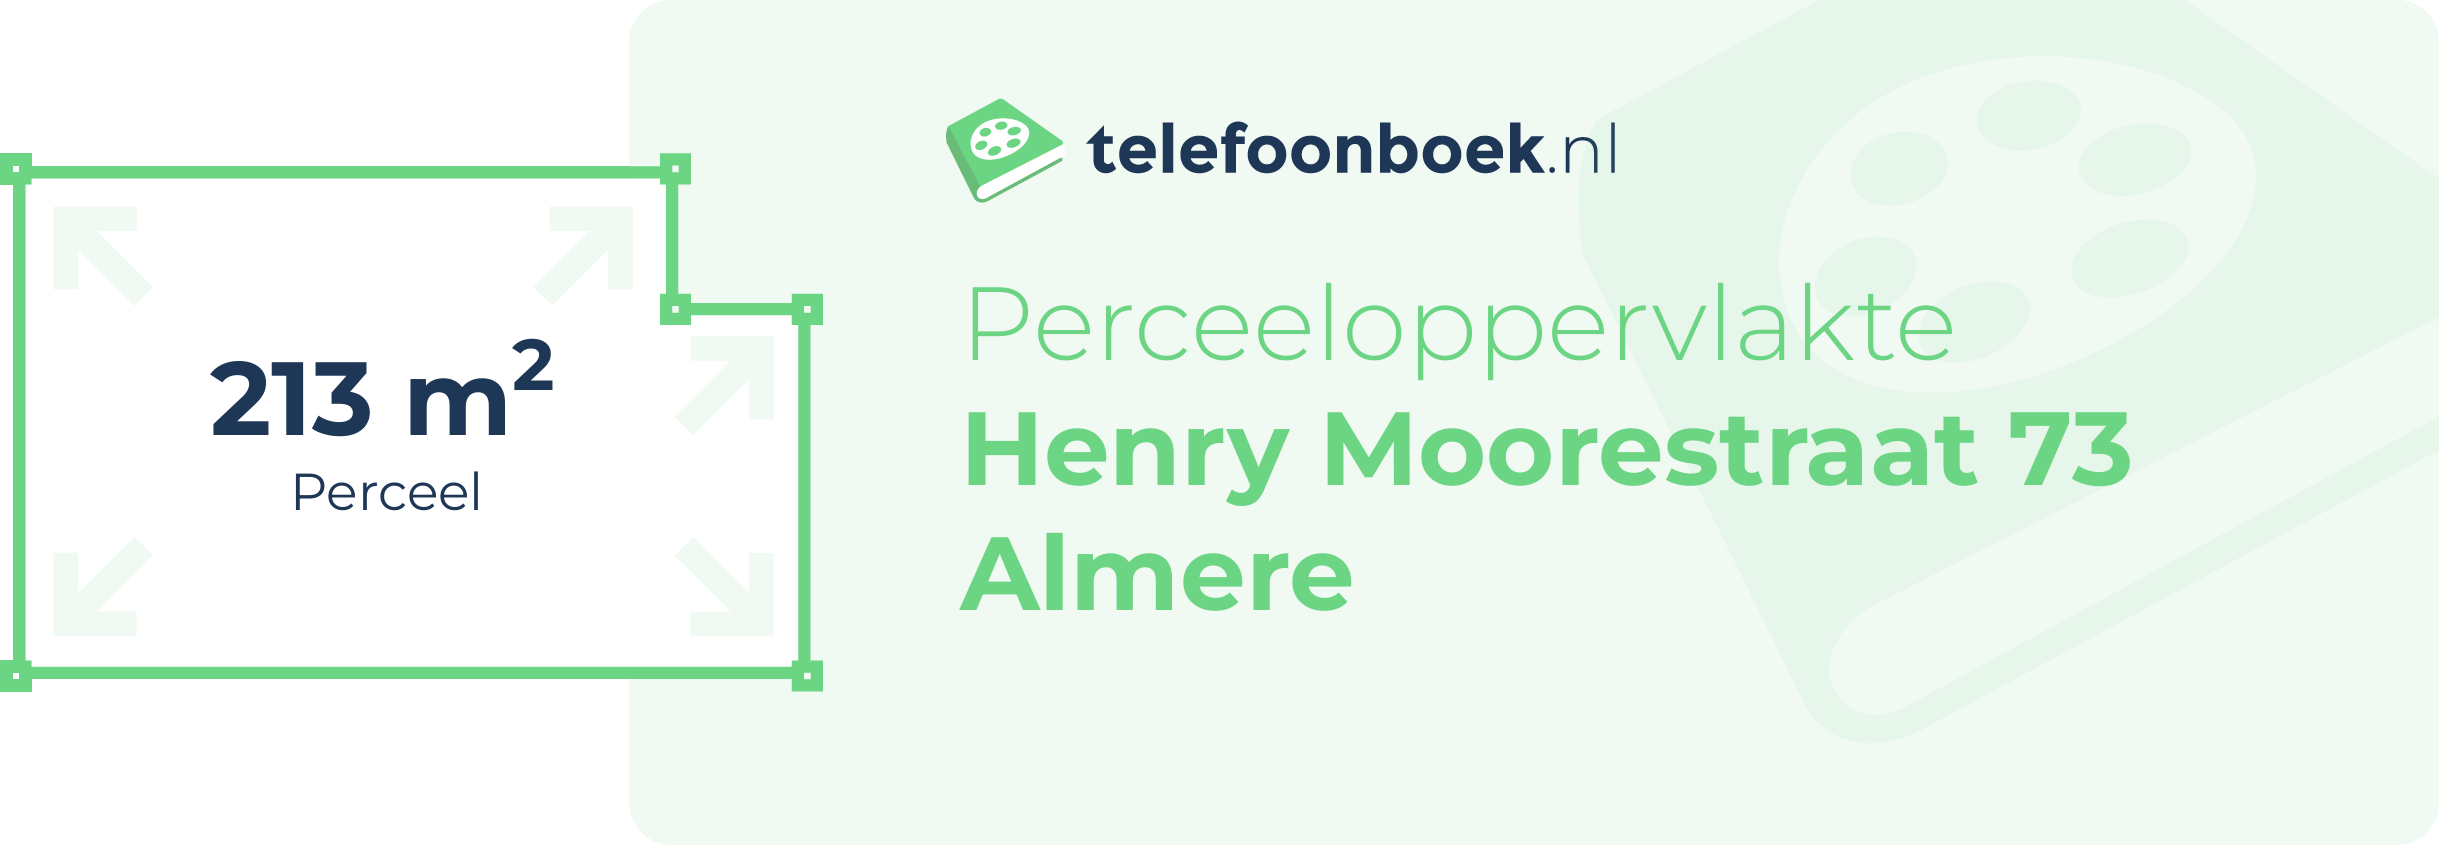 Perceeloppervlakte Henry Moorestraat 73 Almere